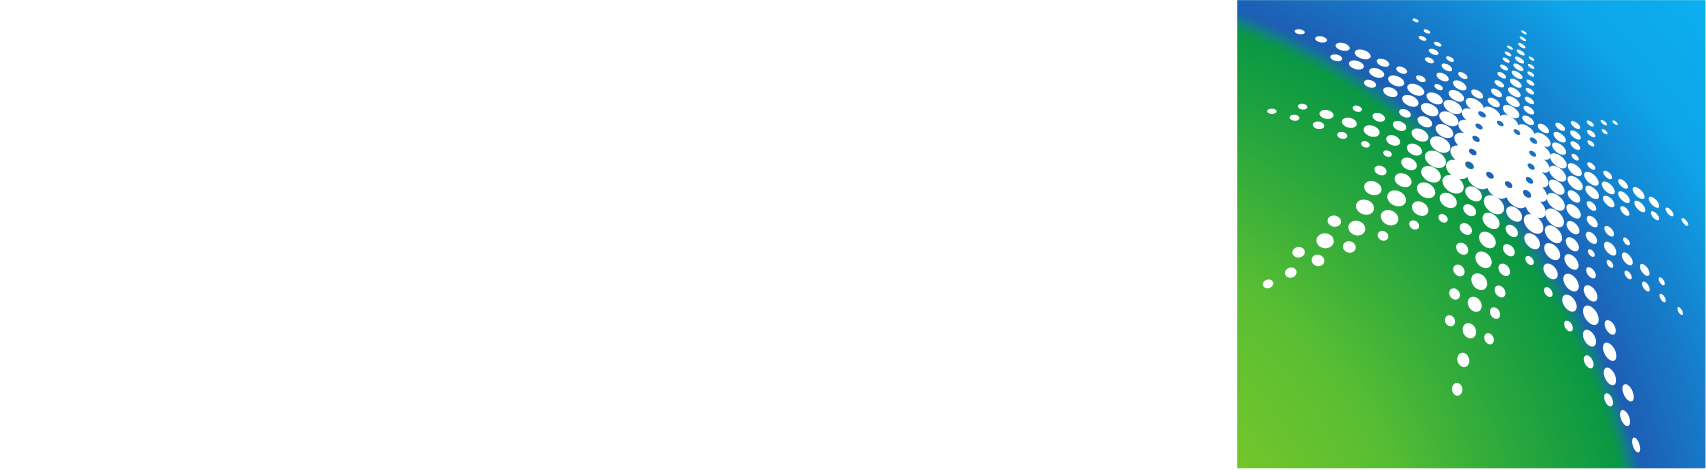 Saudi Aramco logo large for dark backgrounds (transparent PNG)